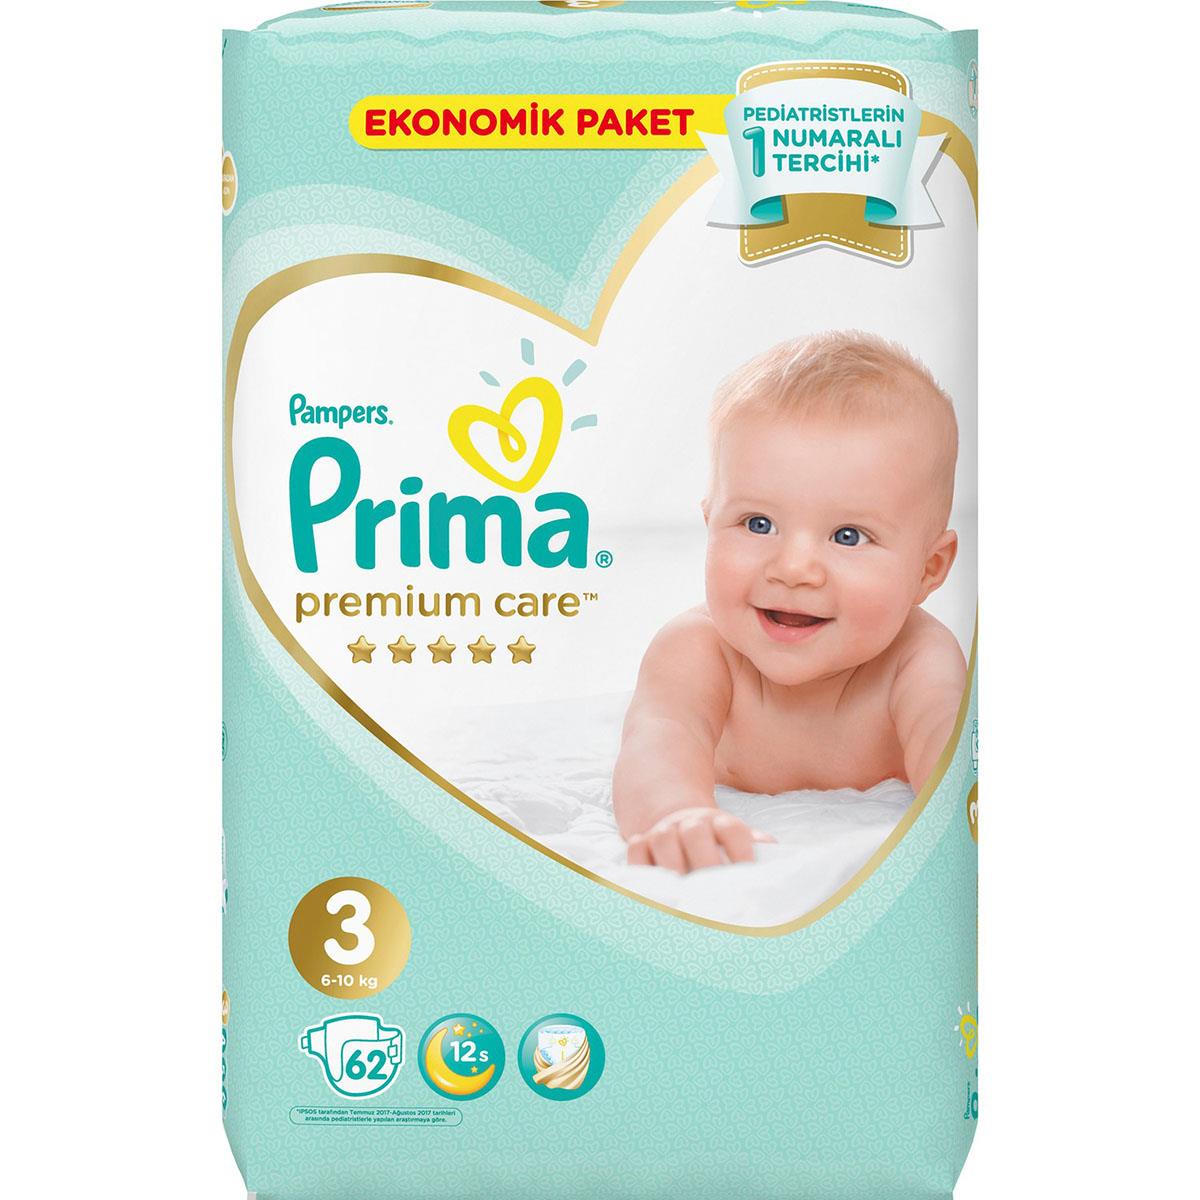 Prima Premium Care 3 Beden 62 Adet Bebek Bezi  Ekonomik Paket